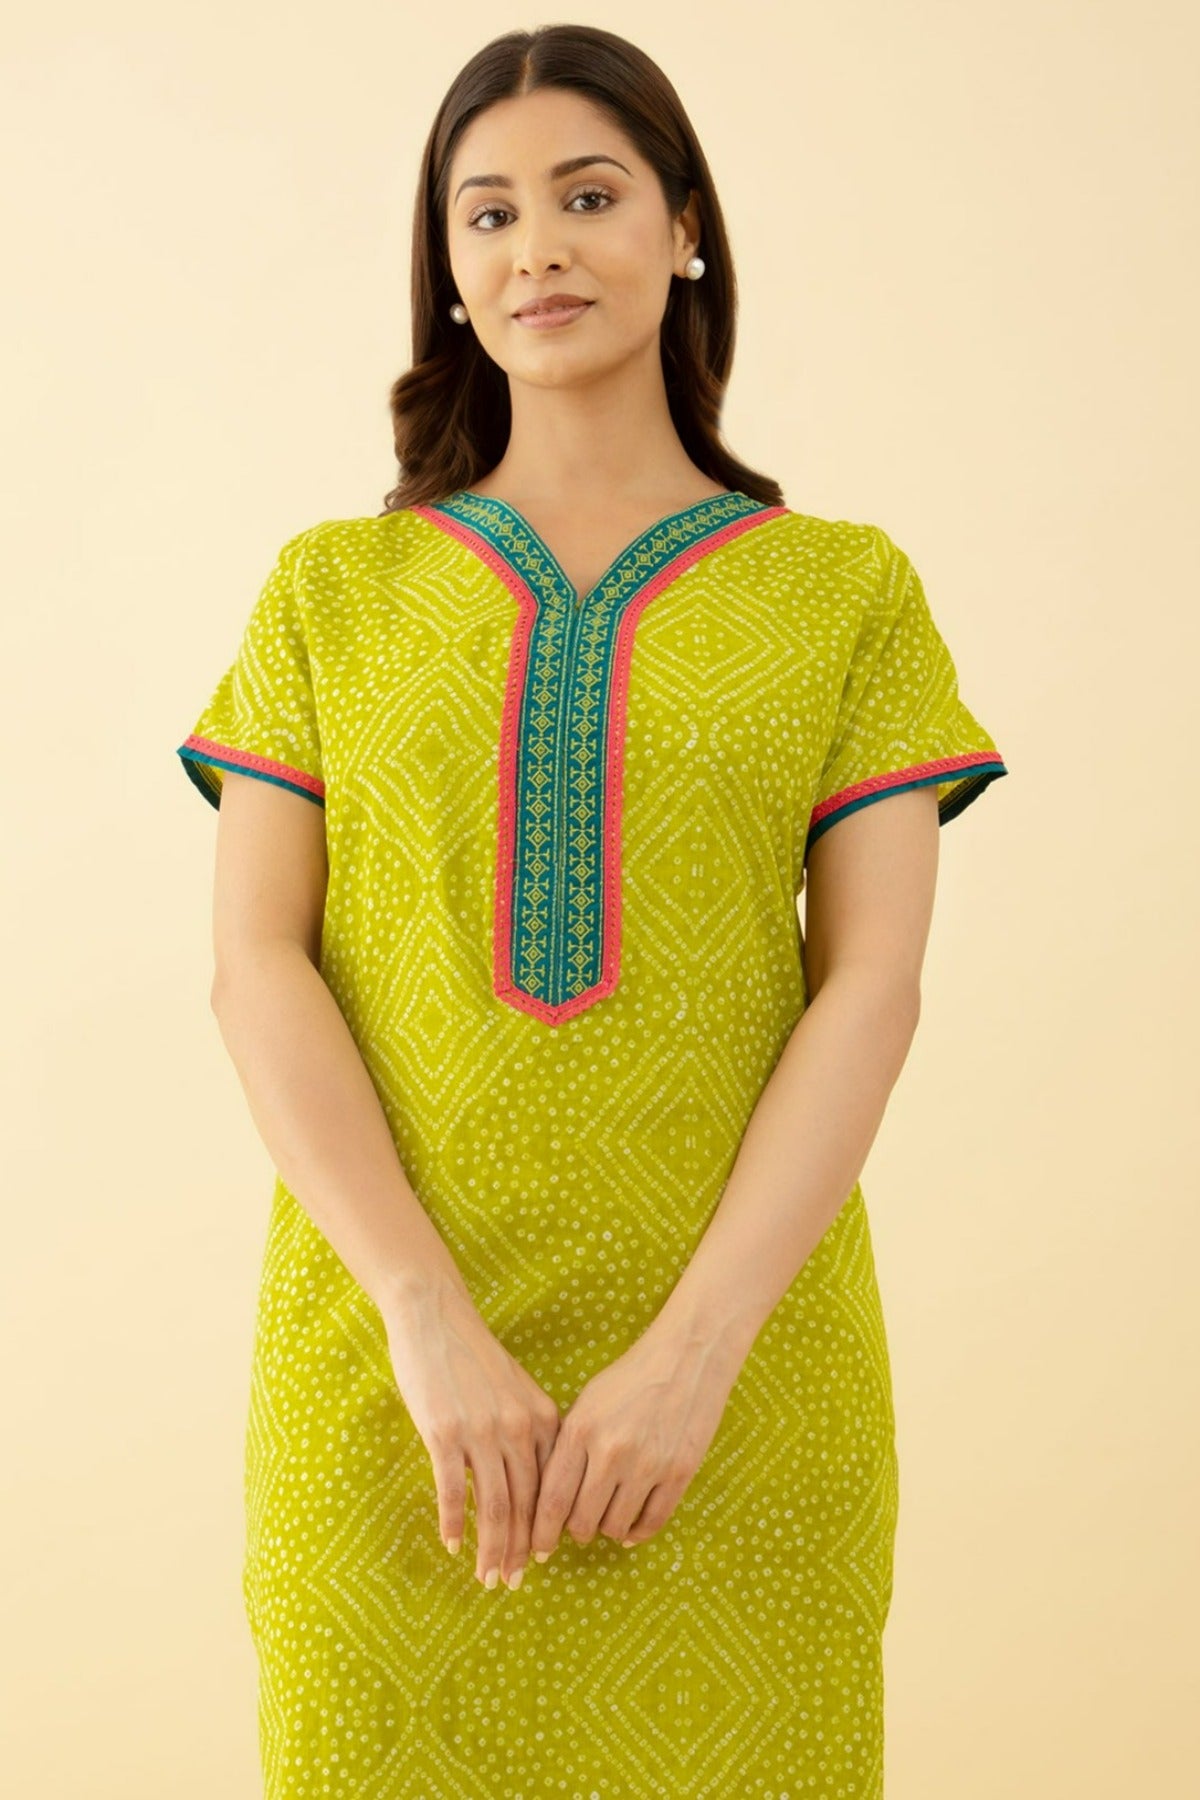 Printed Bandhani Green Cotton Nighty: V-Neck Embroiderery